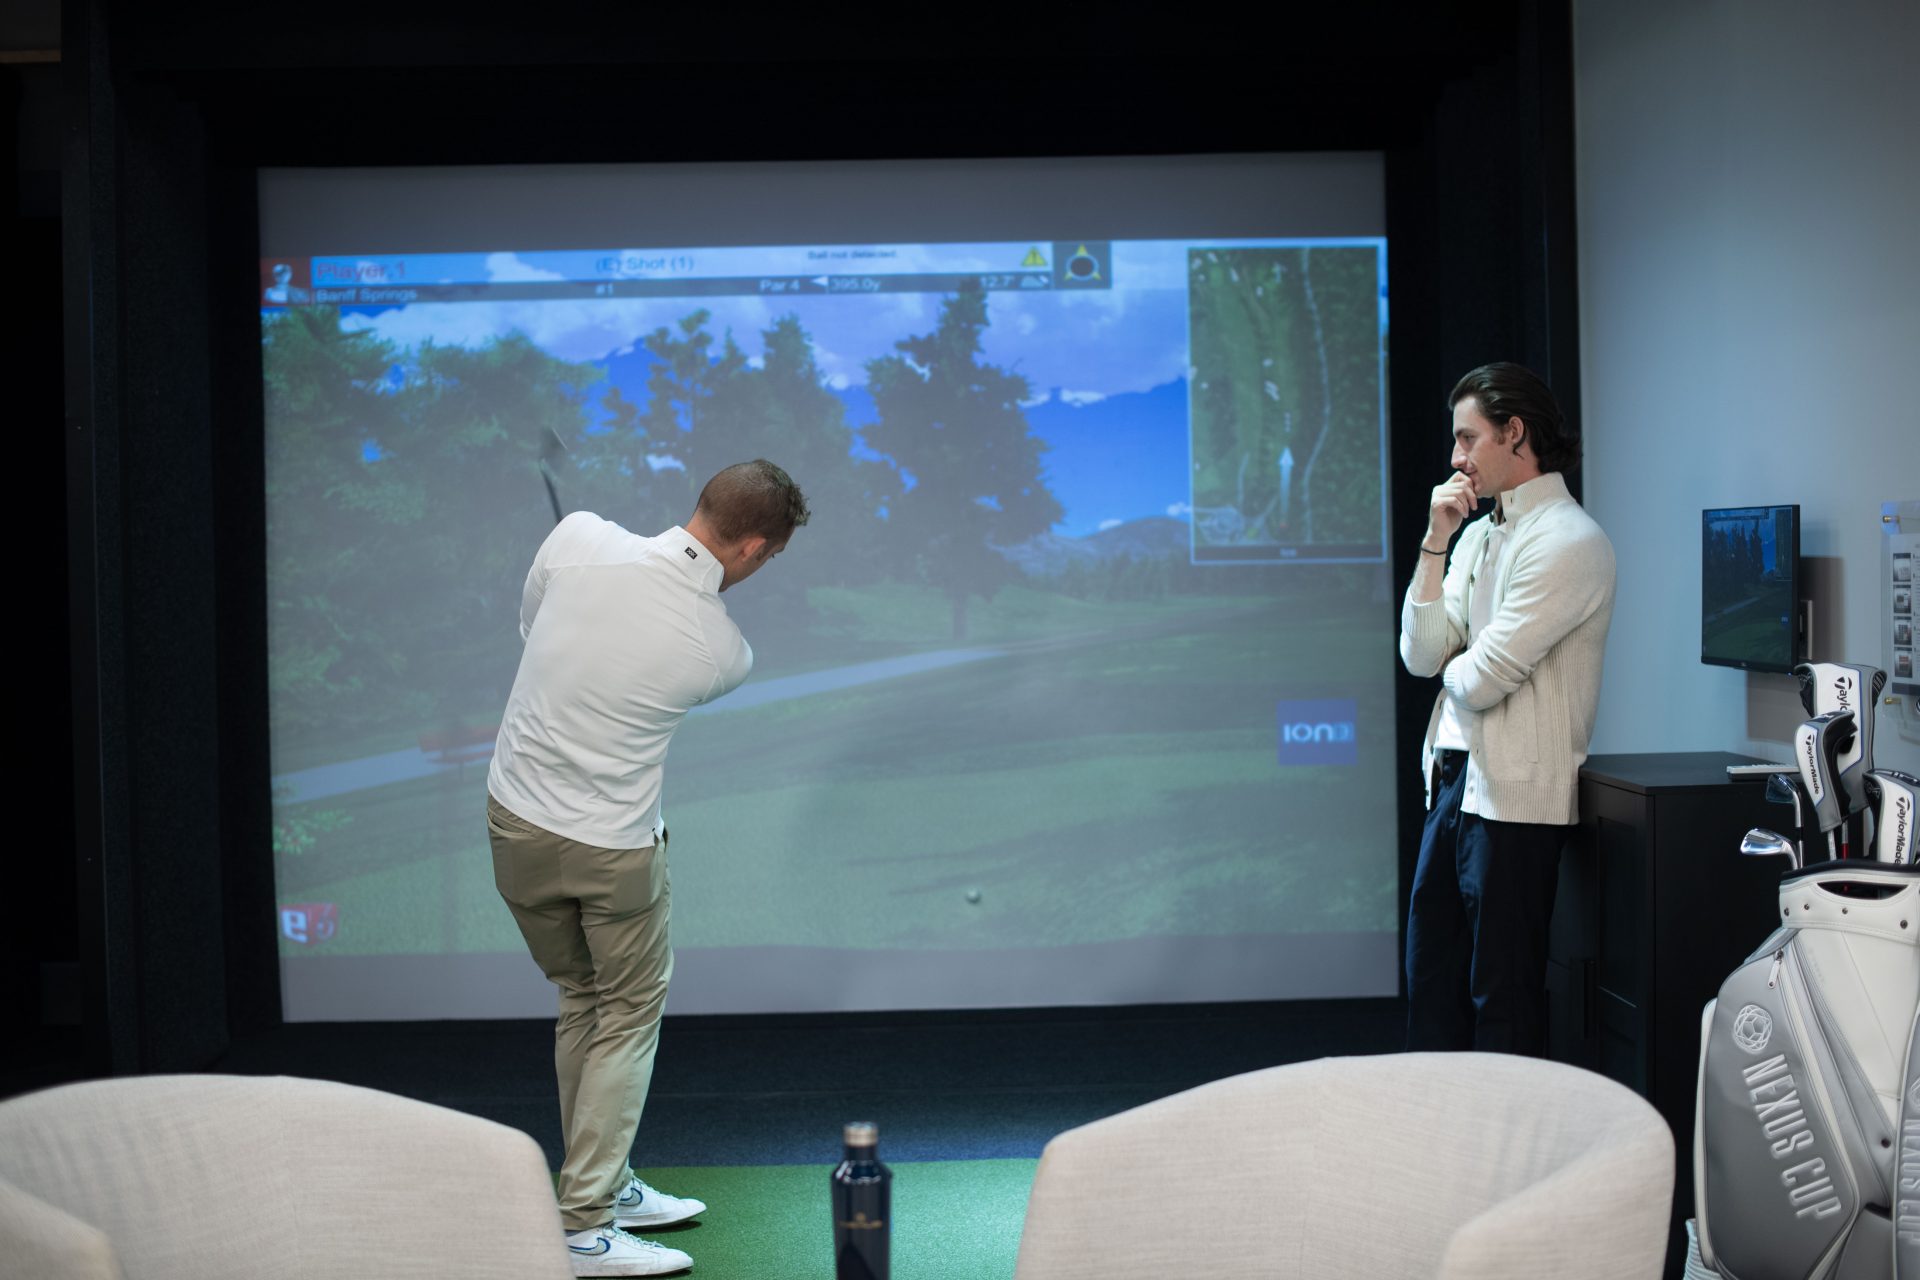 Collin Woods teaching another man golf